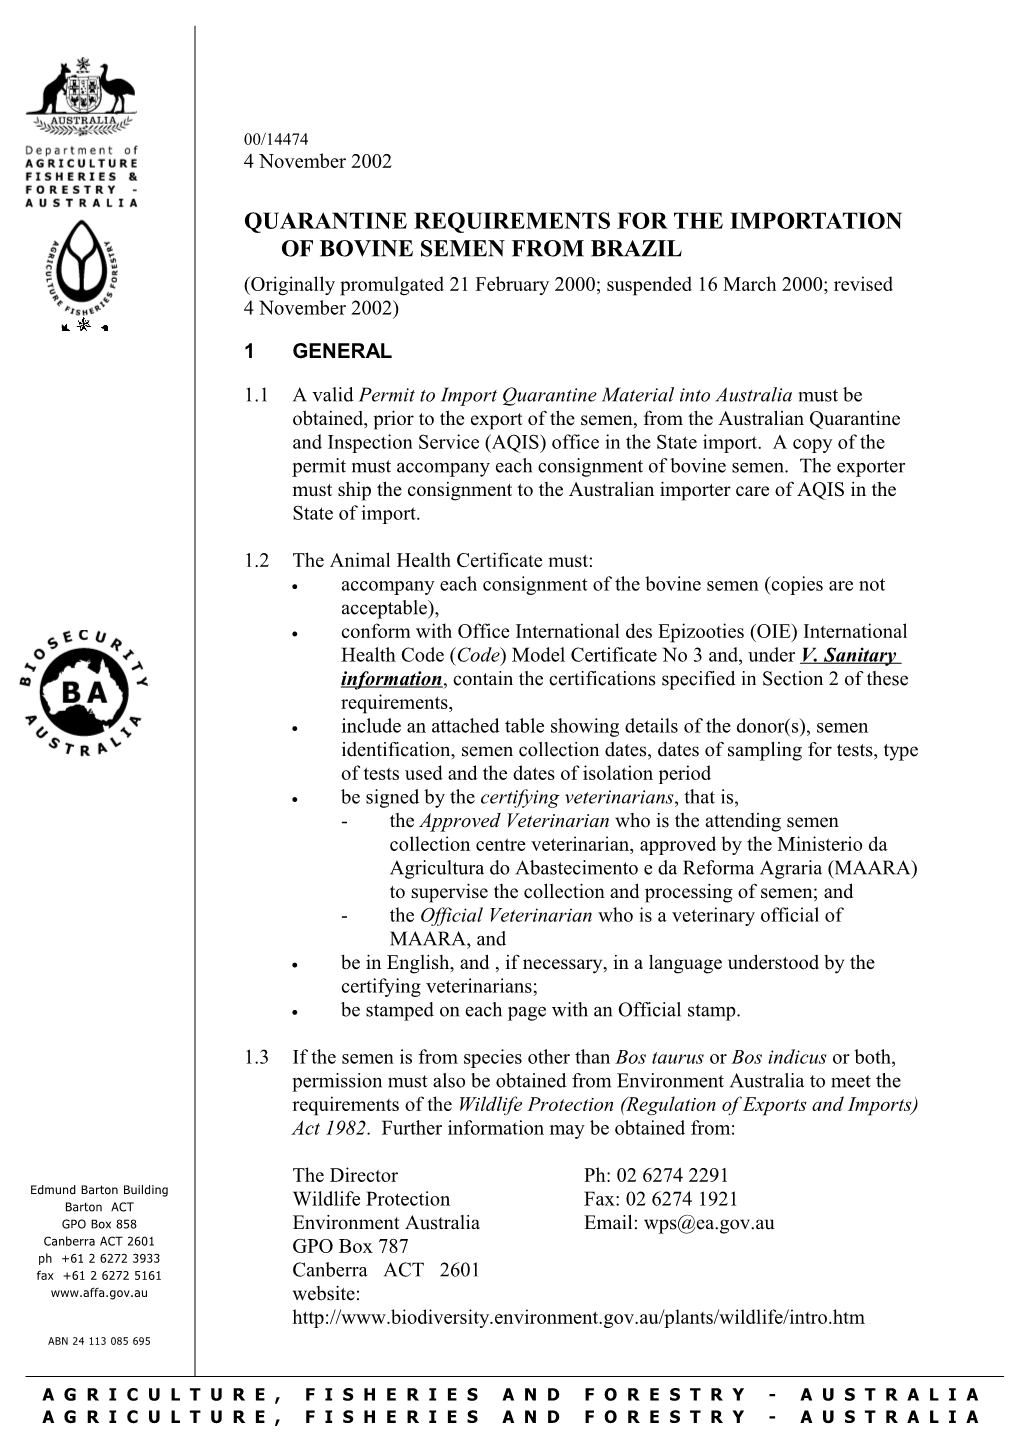 Quarantine Requirements for the Importation of Bovine Semen from Brazil